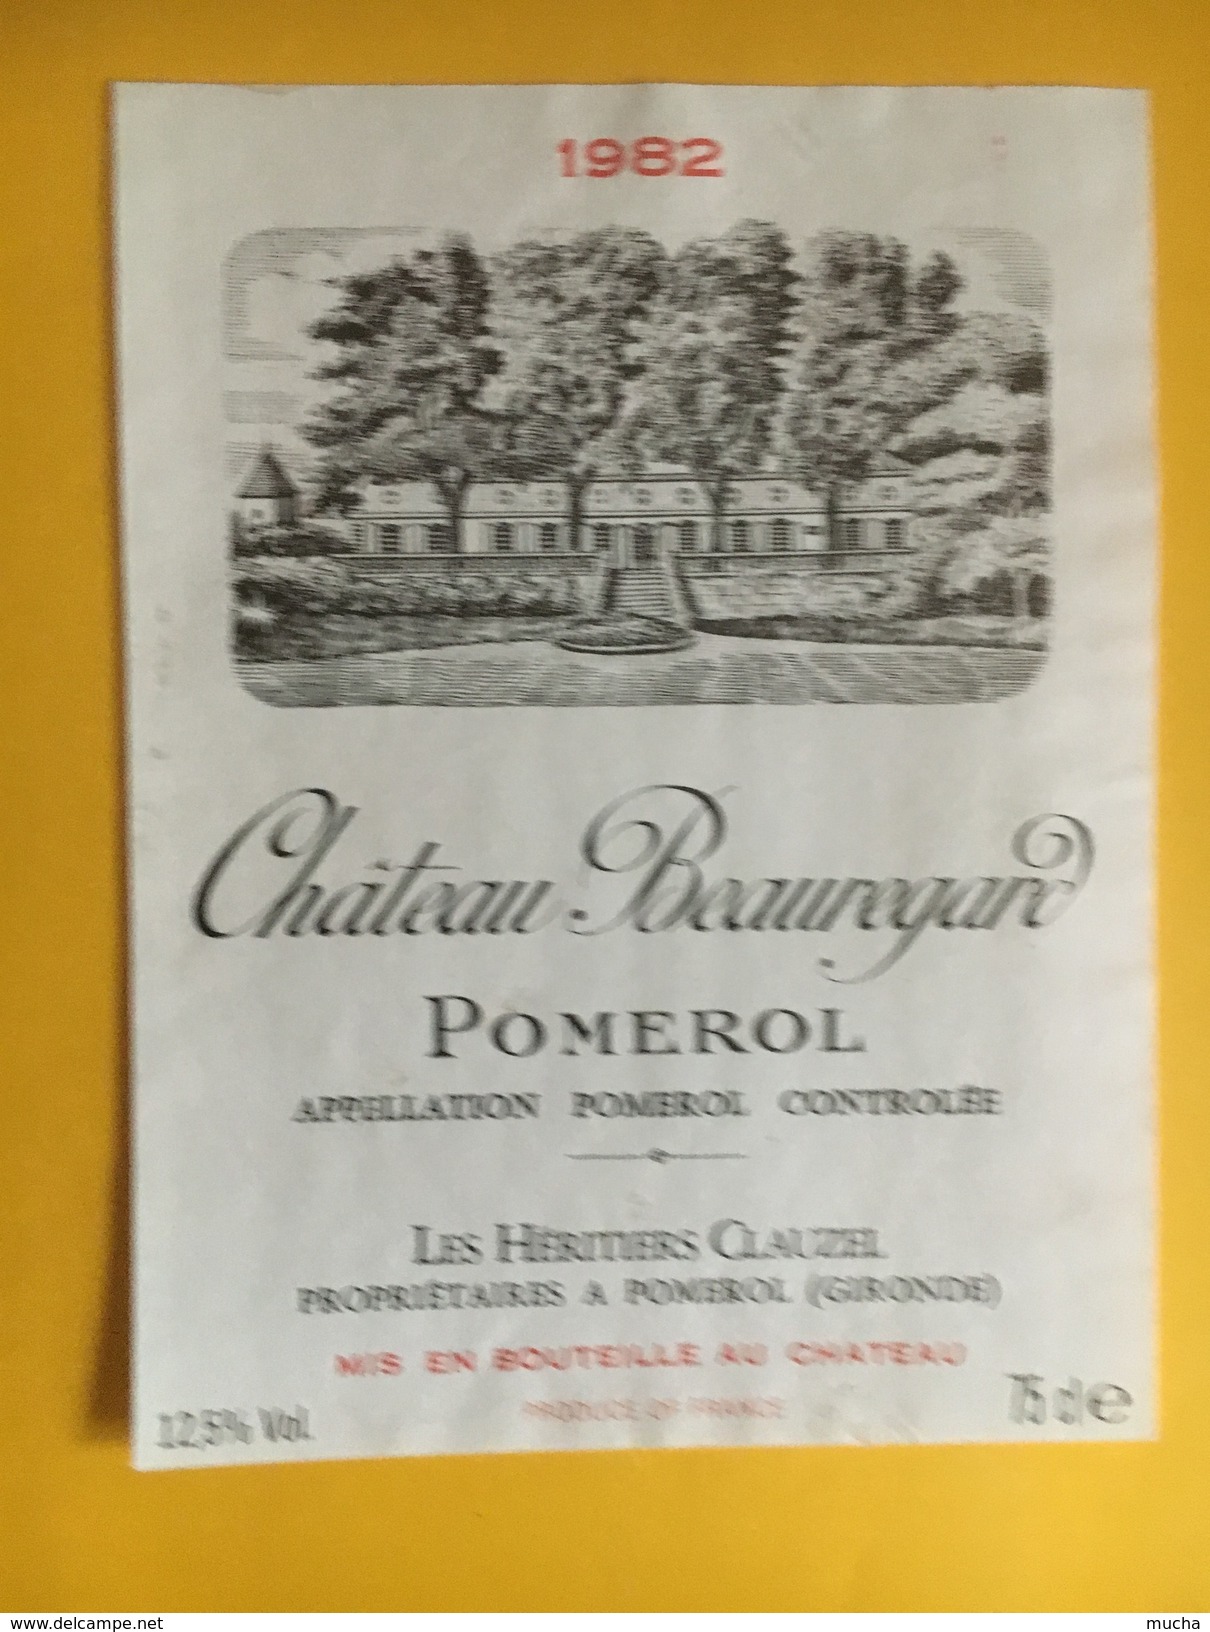 6052 - Château Beauregard 1982 Pomerol - Bordeaux